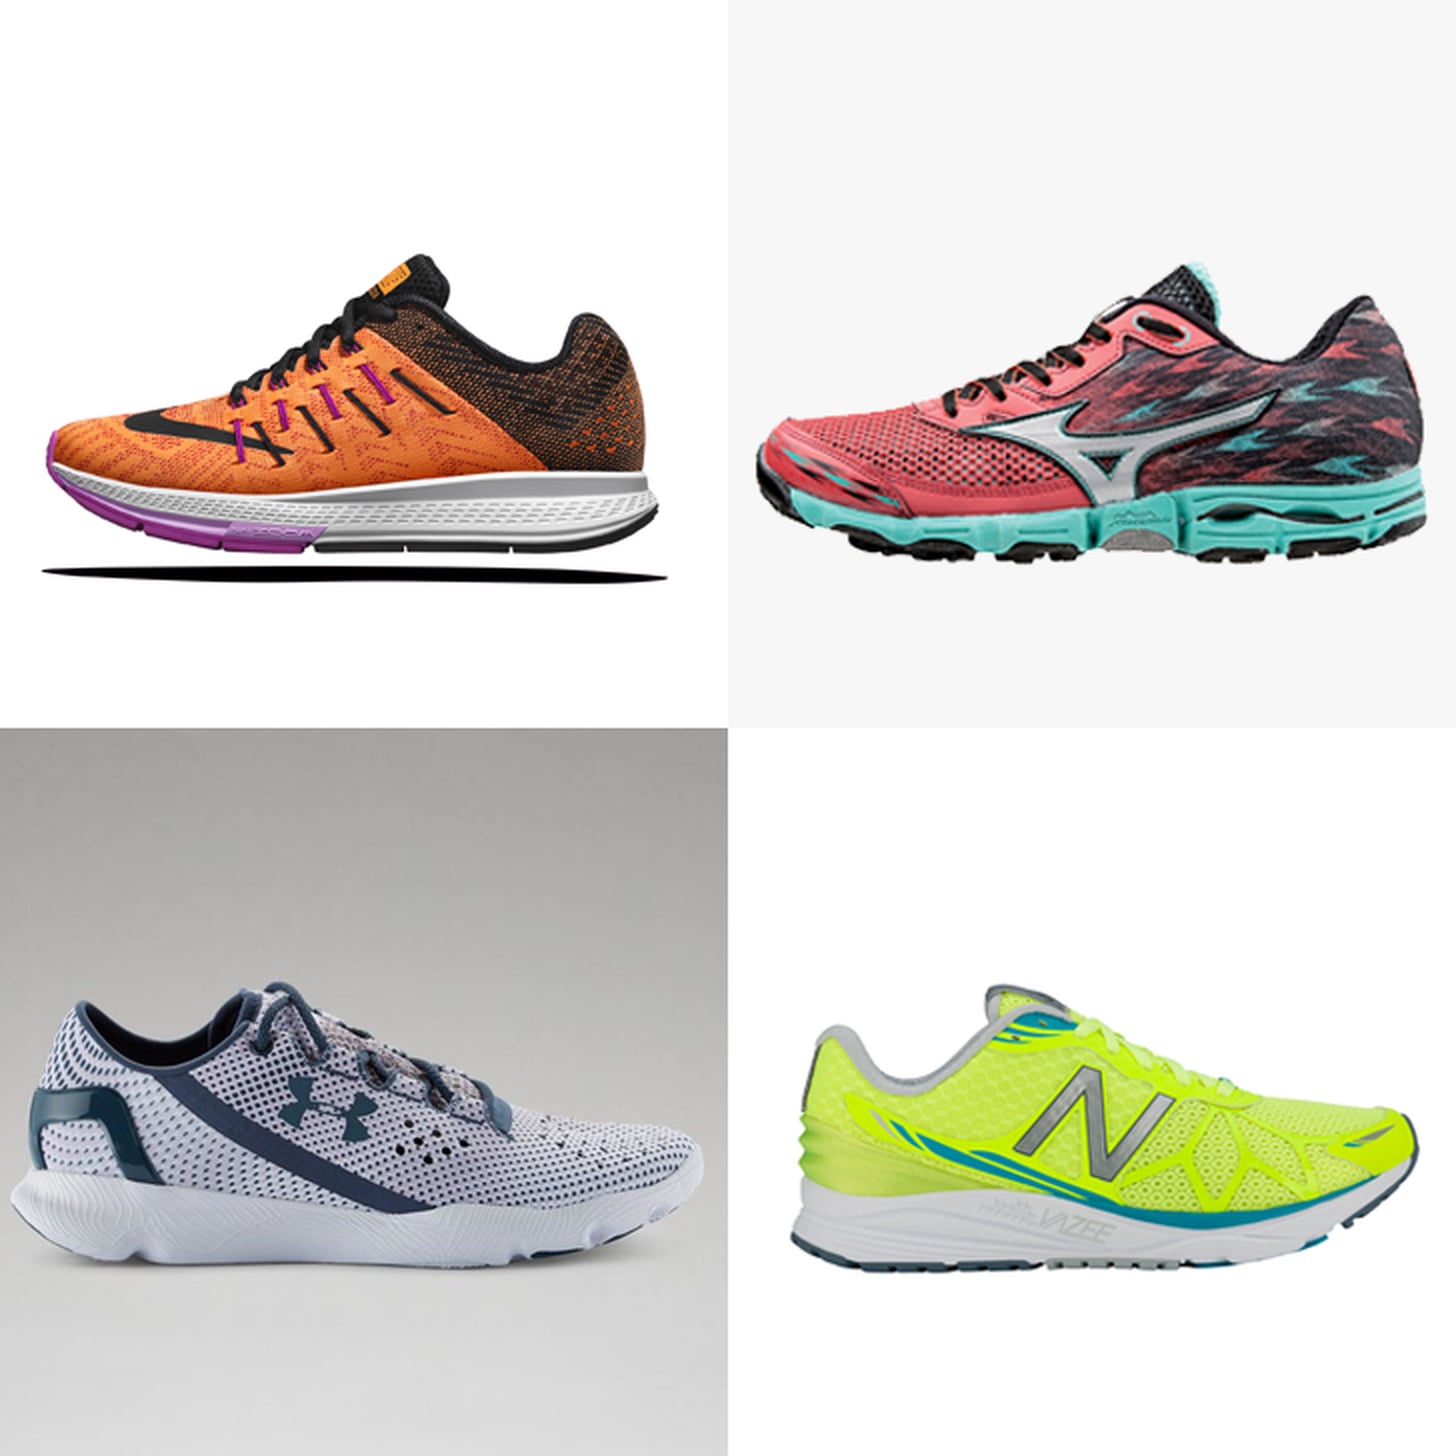 Women's Running Shoes | Summer 2015 | POPSUGAR Fitness